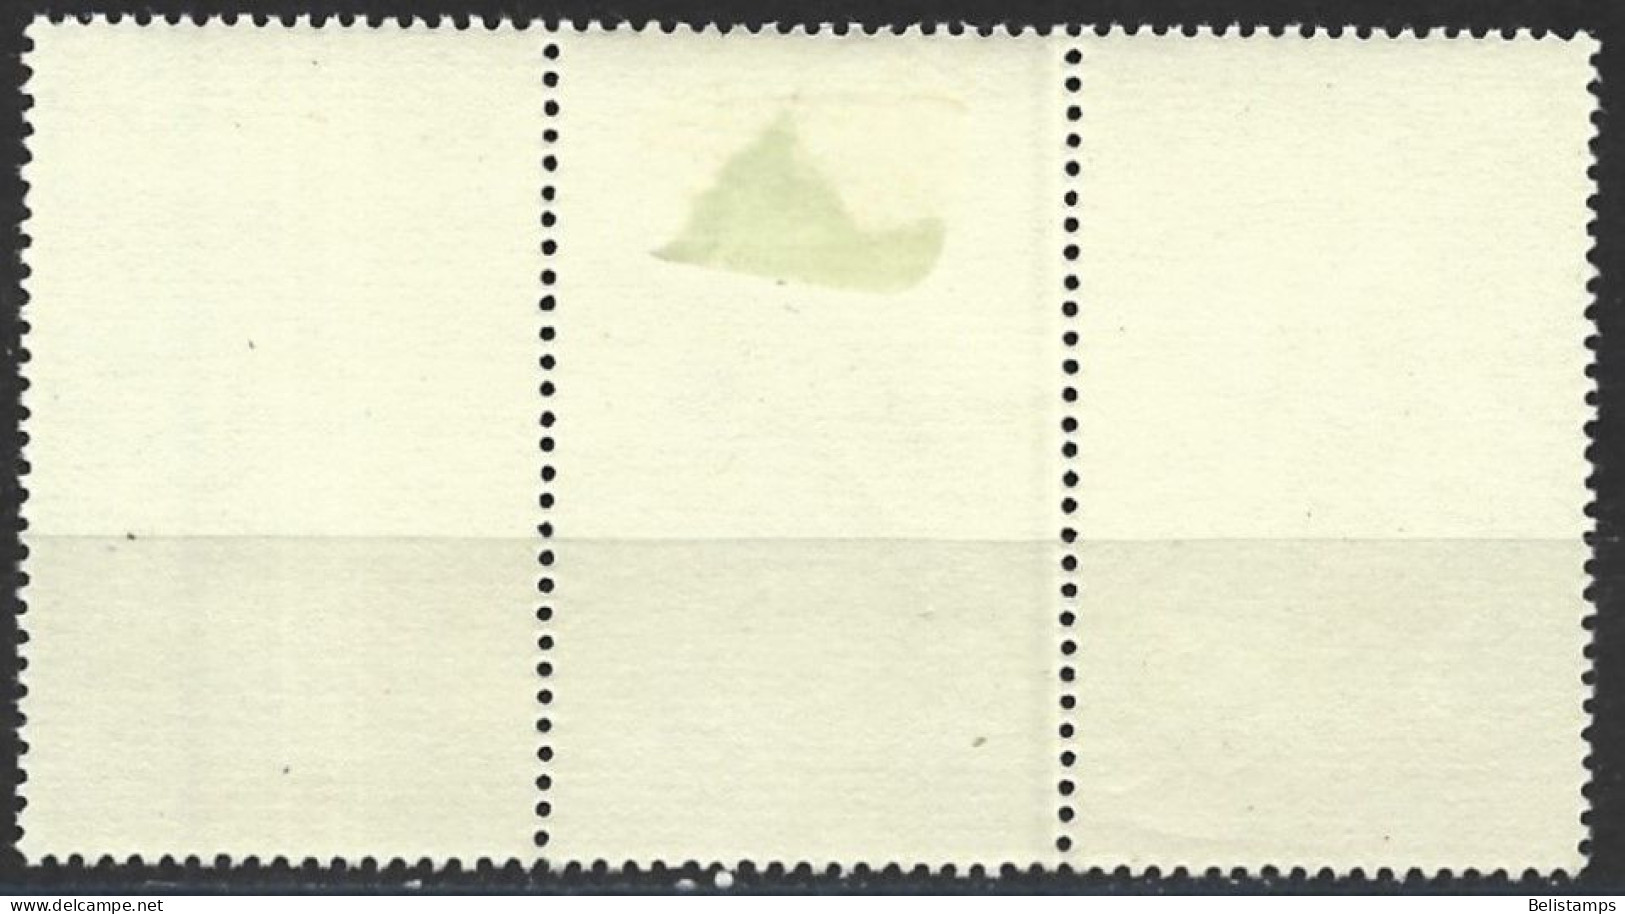 Russia 1958. Scott #1242 (U) Regional Costumes From Transylvania - Used Stamps